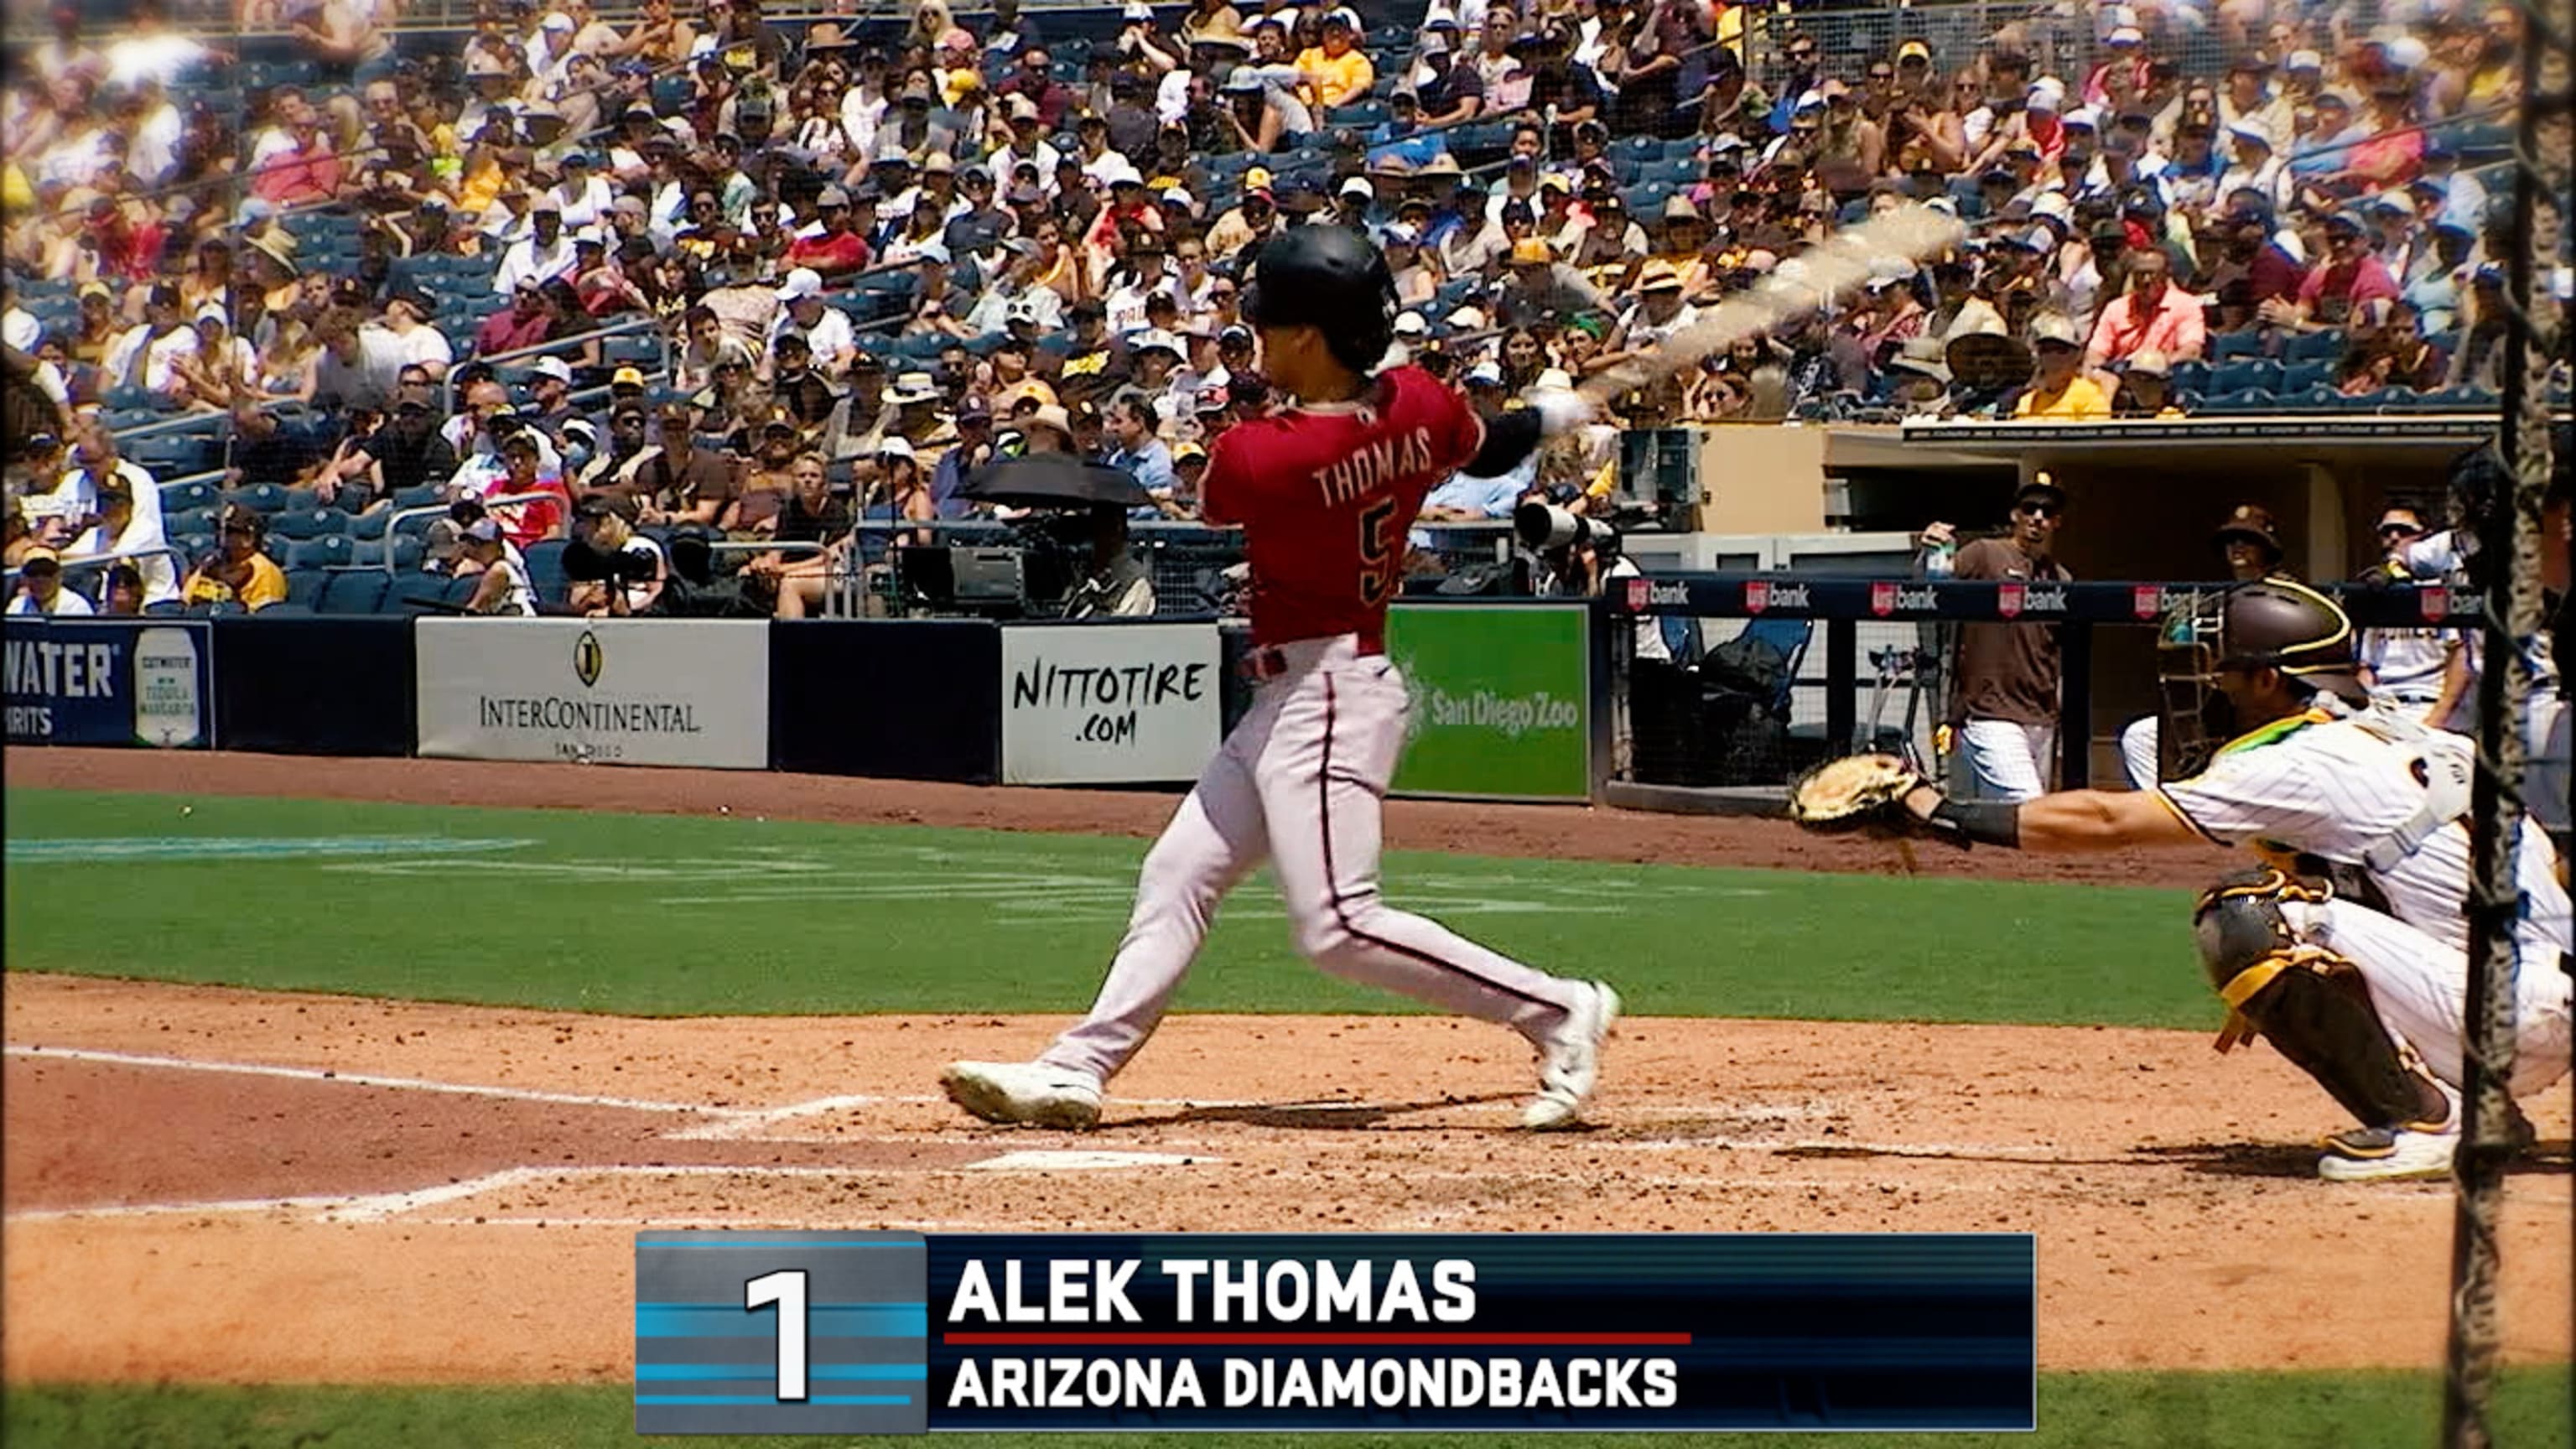 Arizona Diamondbacks must go to the future now with Alek Thomas